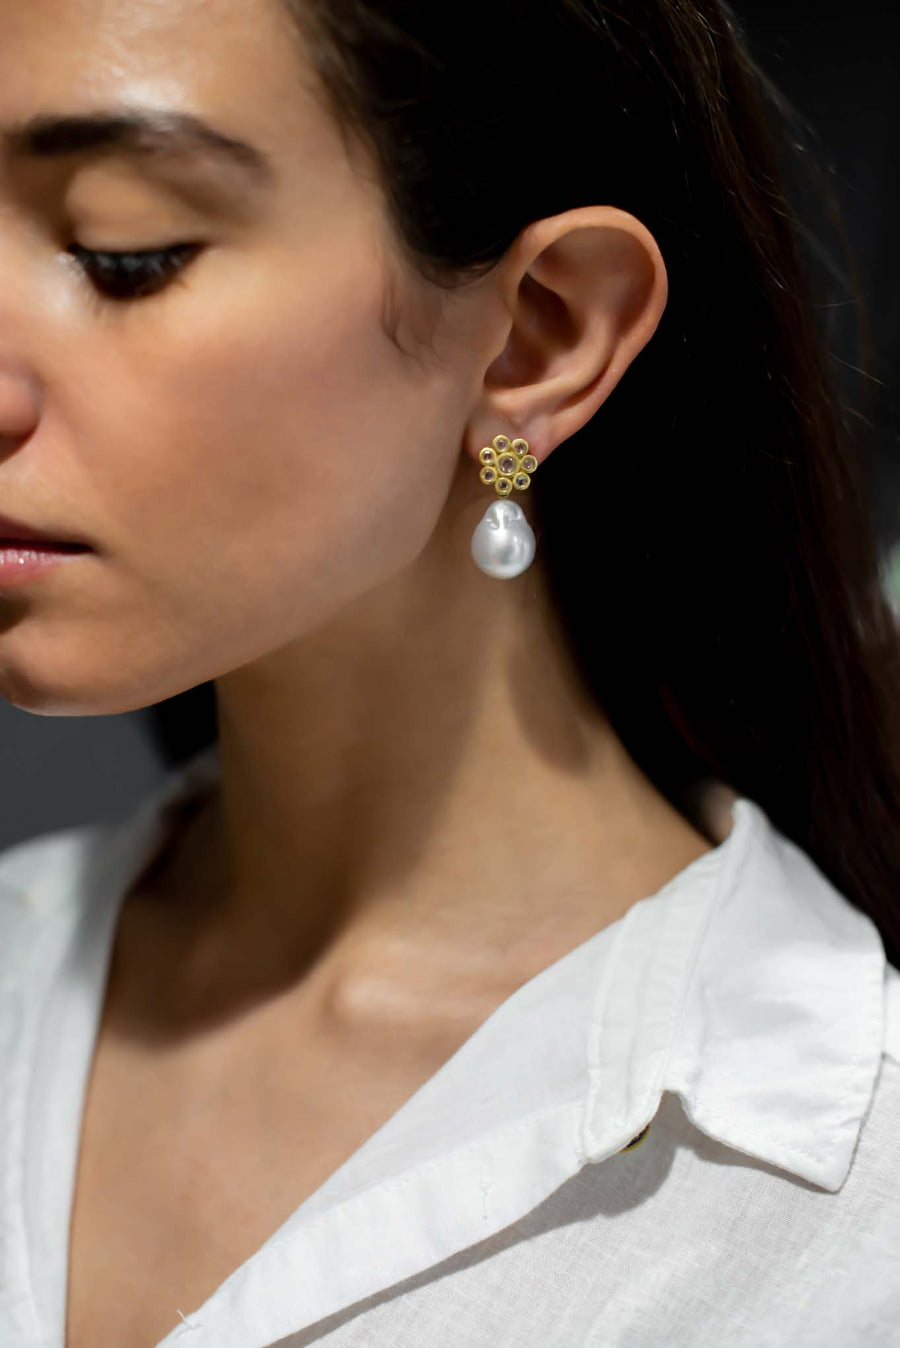 18 Karat Gold Raw Diamond Daisy Stud Earrings with White South Sea Pearl Drops